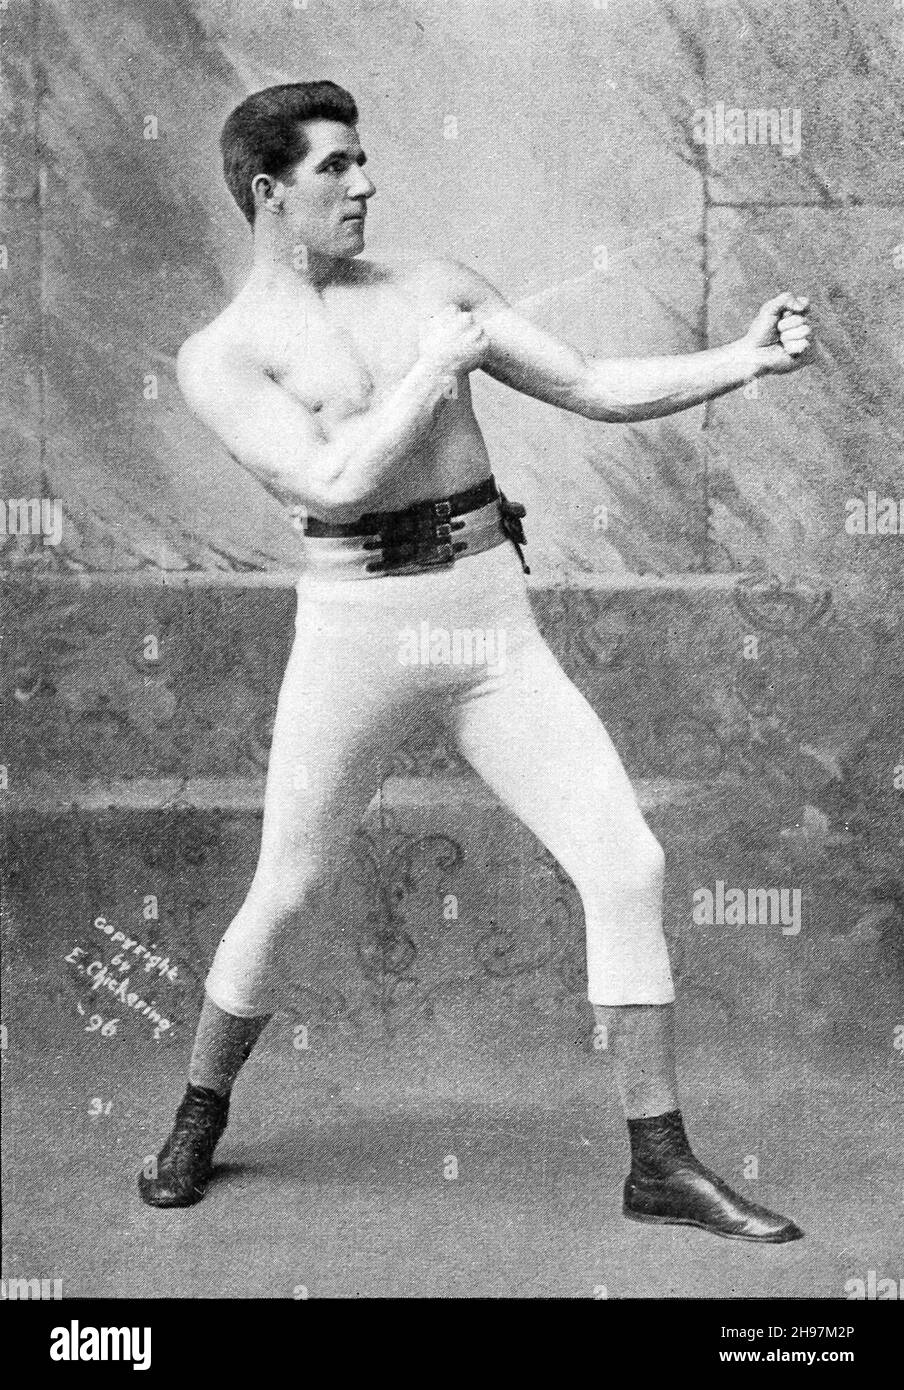 Elmer Chickering (American Photographer) - Gentleman Jim Corbett - James John Corbett - American Boxer and World Heavyweight Champion - 1896 Stock Photo